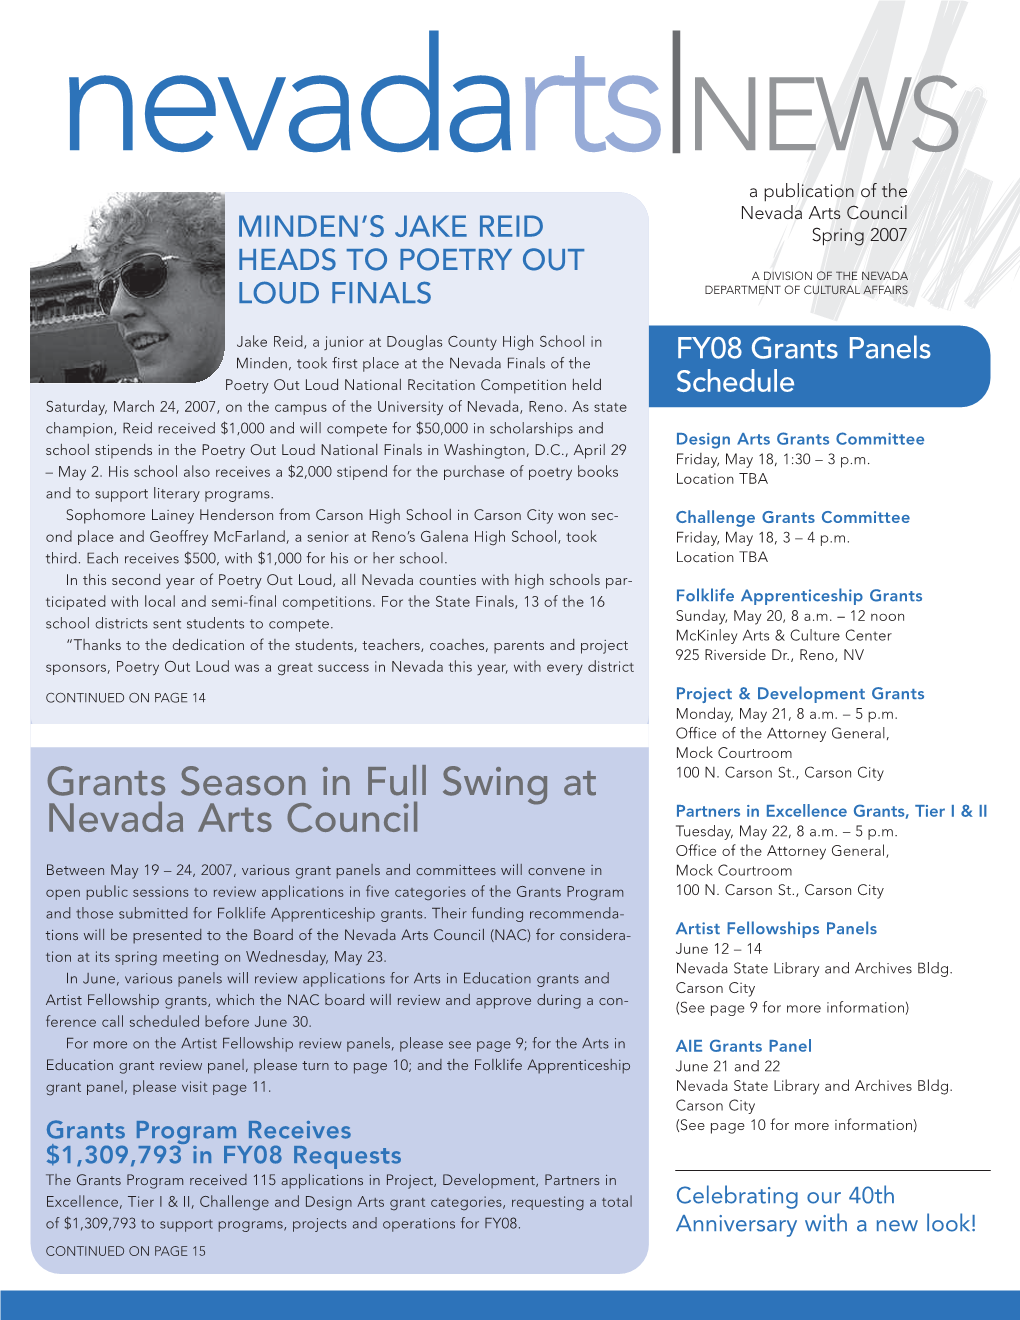 Grants Season in Full Swing at Nevada Arts Council